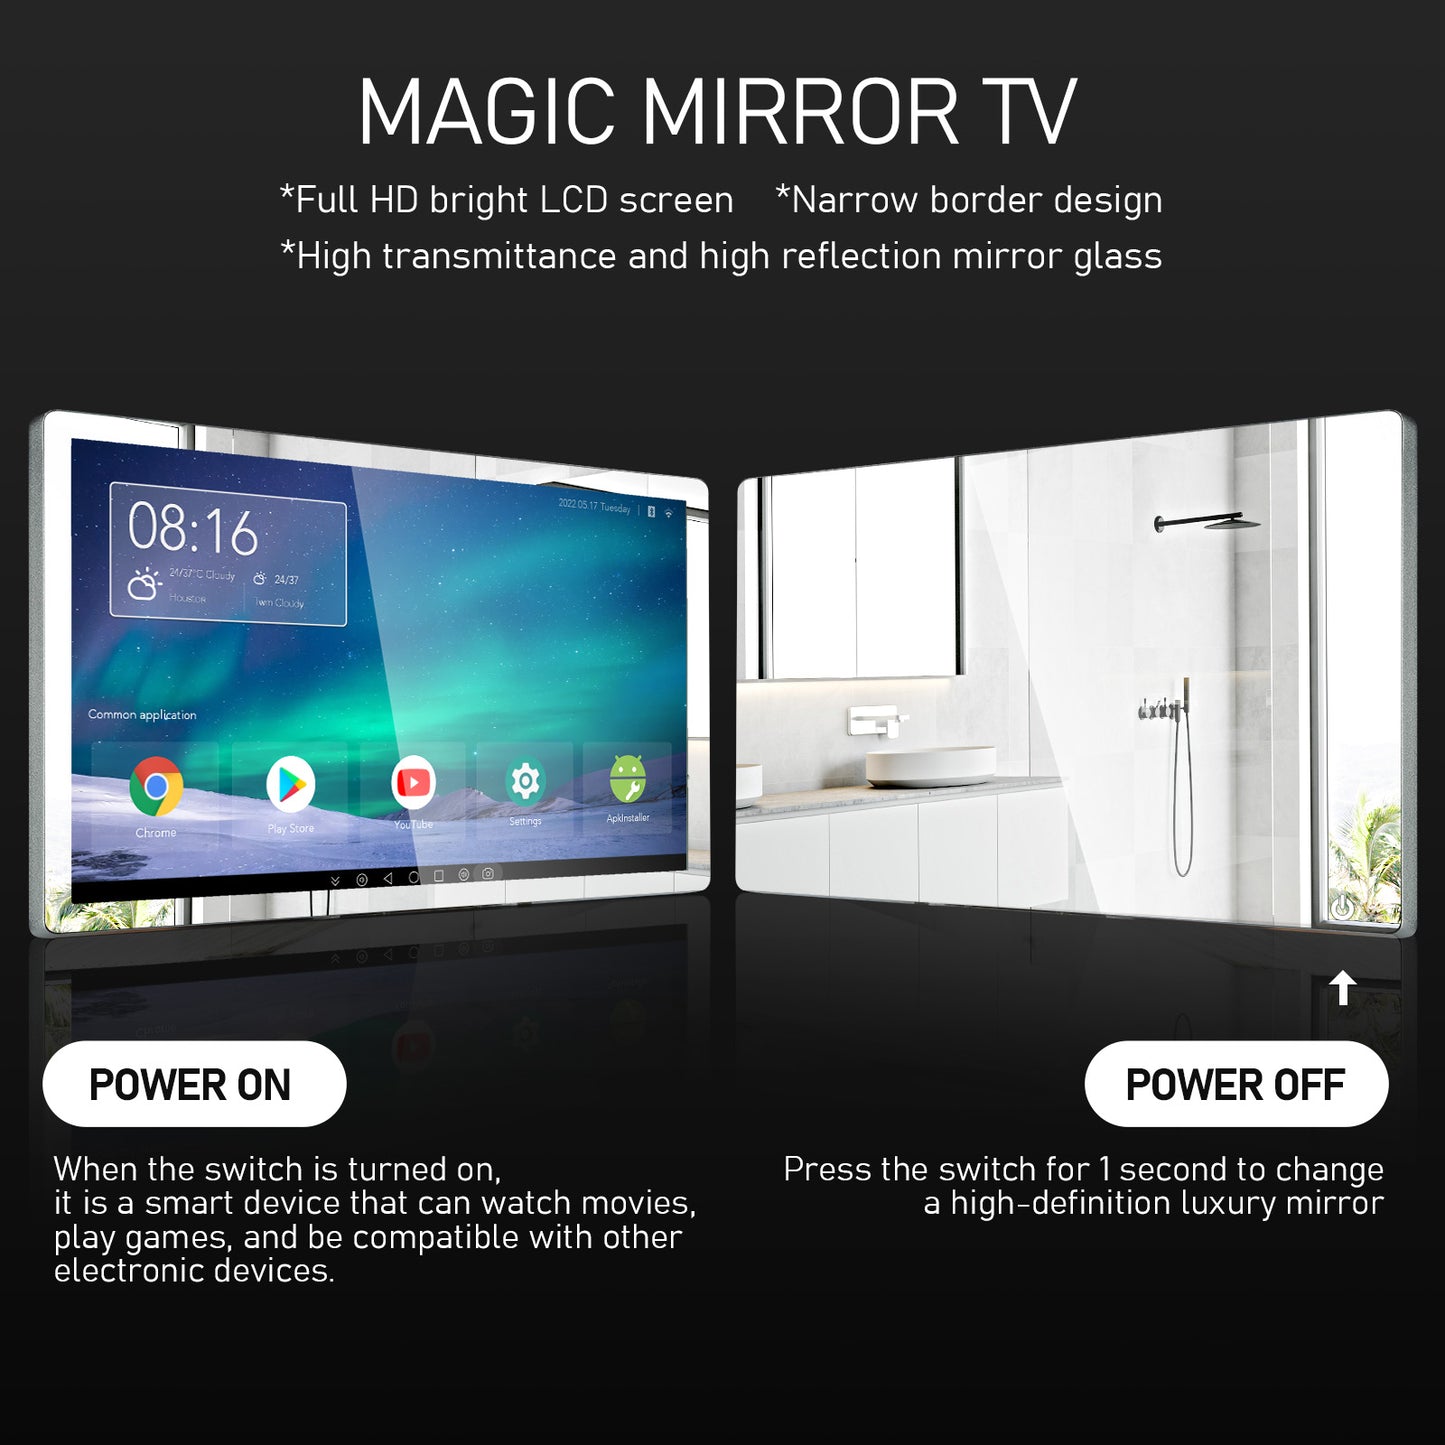 Leotachi 21.5 inch Smart Touch Screen Mirror IP66 Waterproof TV for Bathroom Shower - Support 360° Rotation, 500 nits High Brightness Full HD 1080P(LEOSMJMG-215-R)